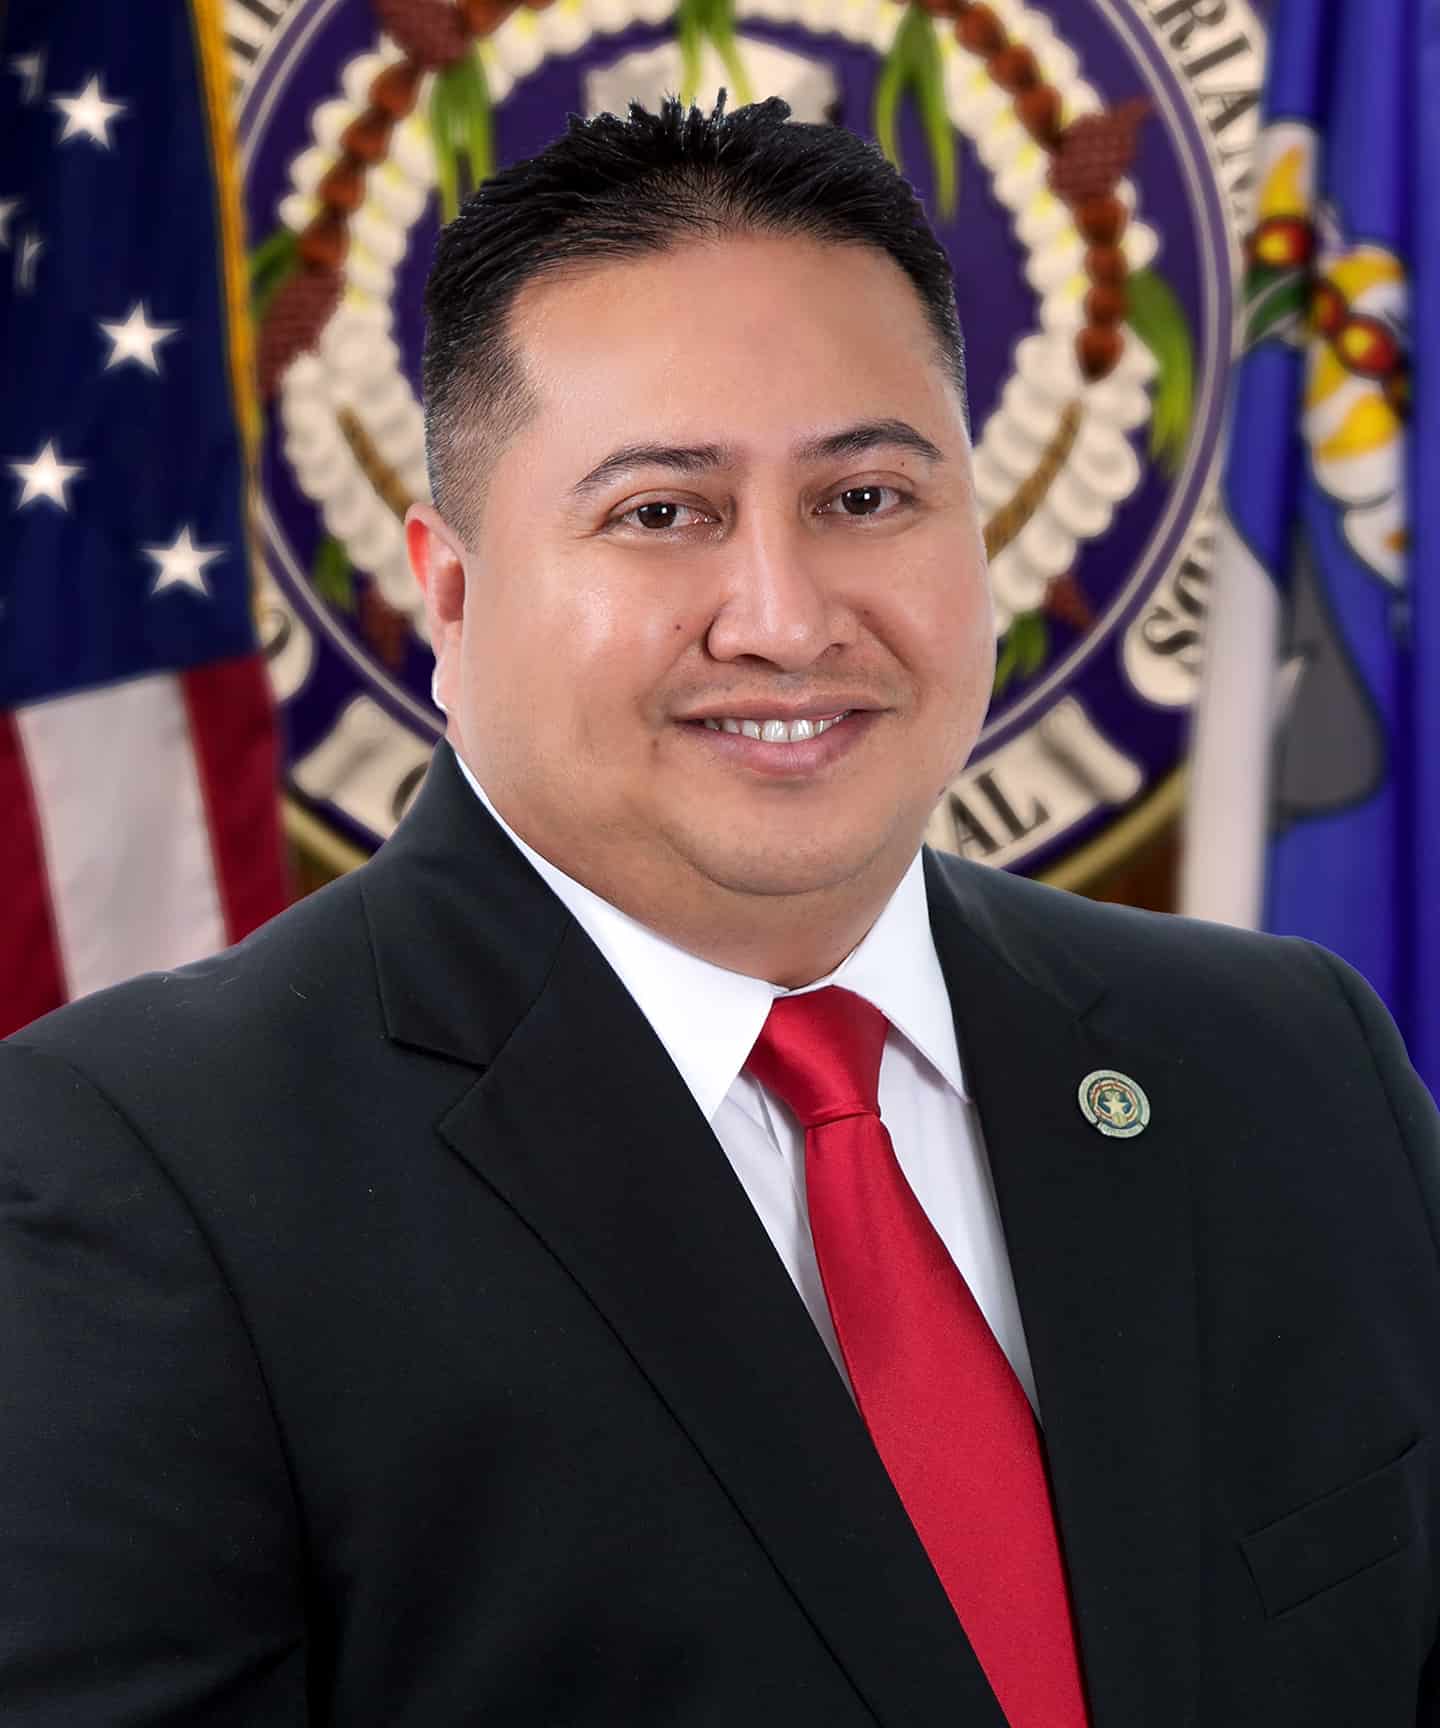 Governor Torres